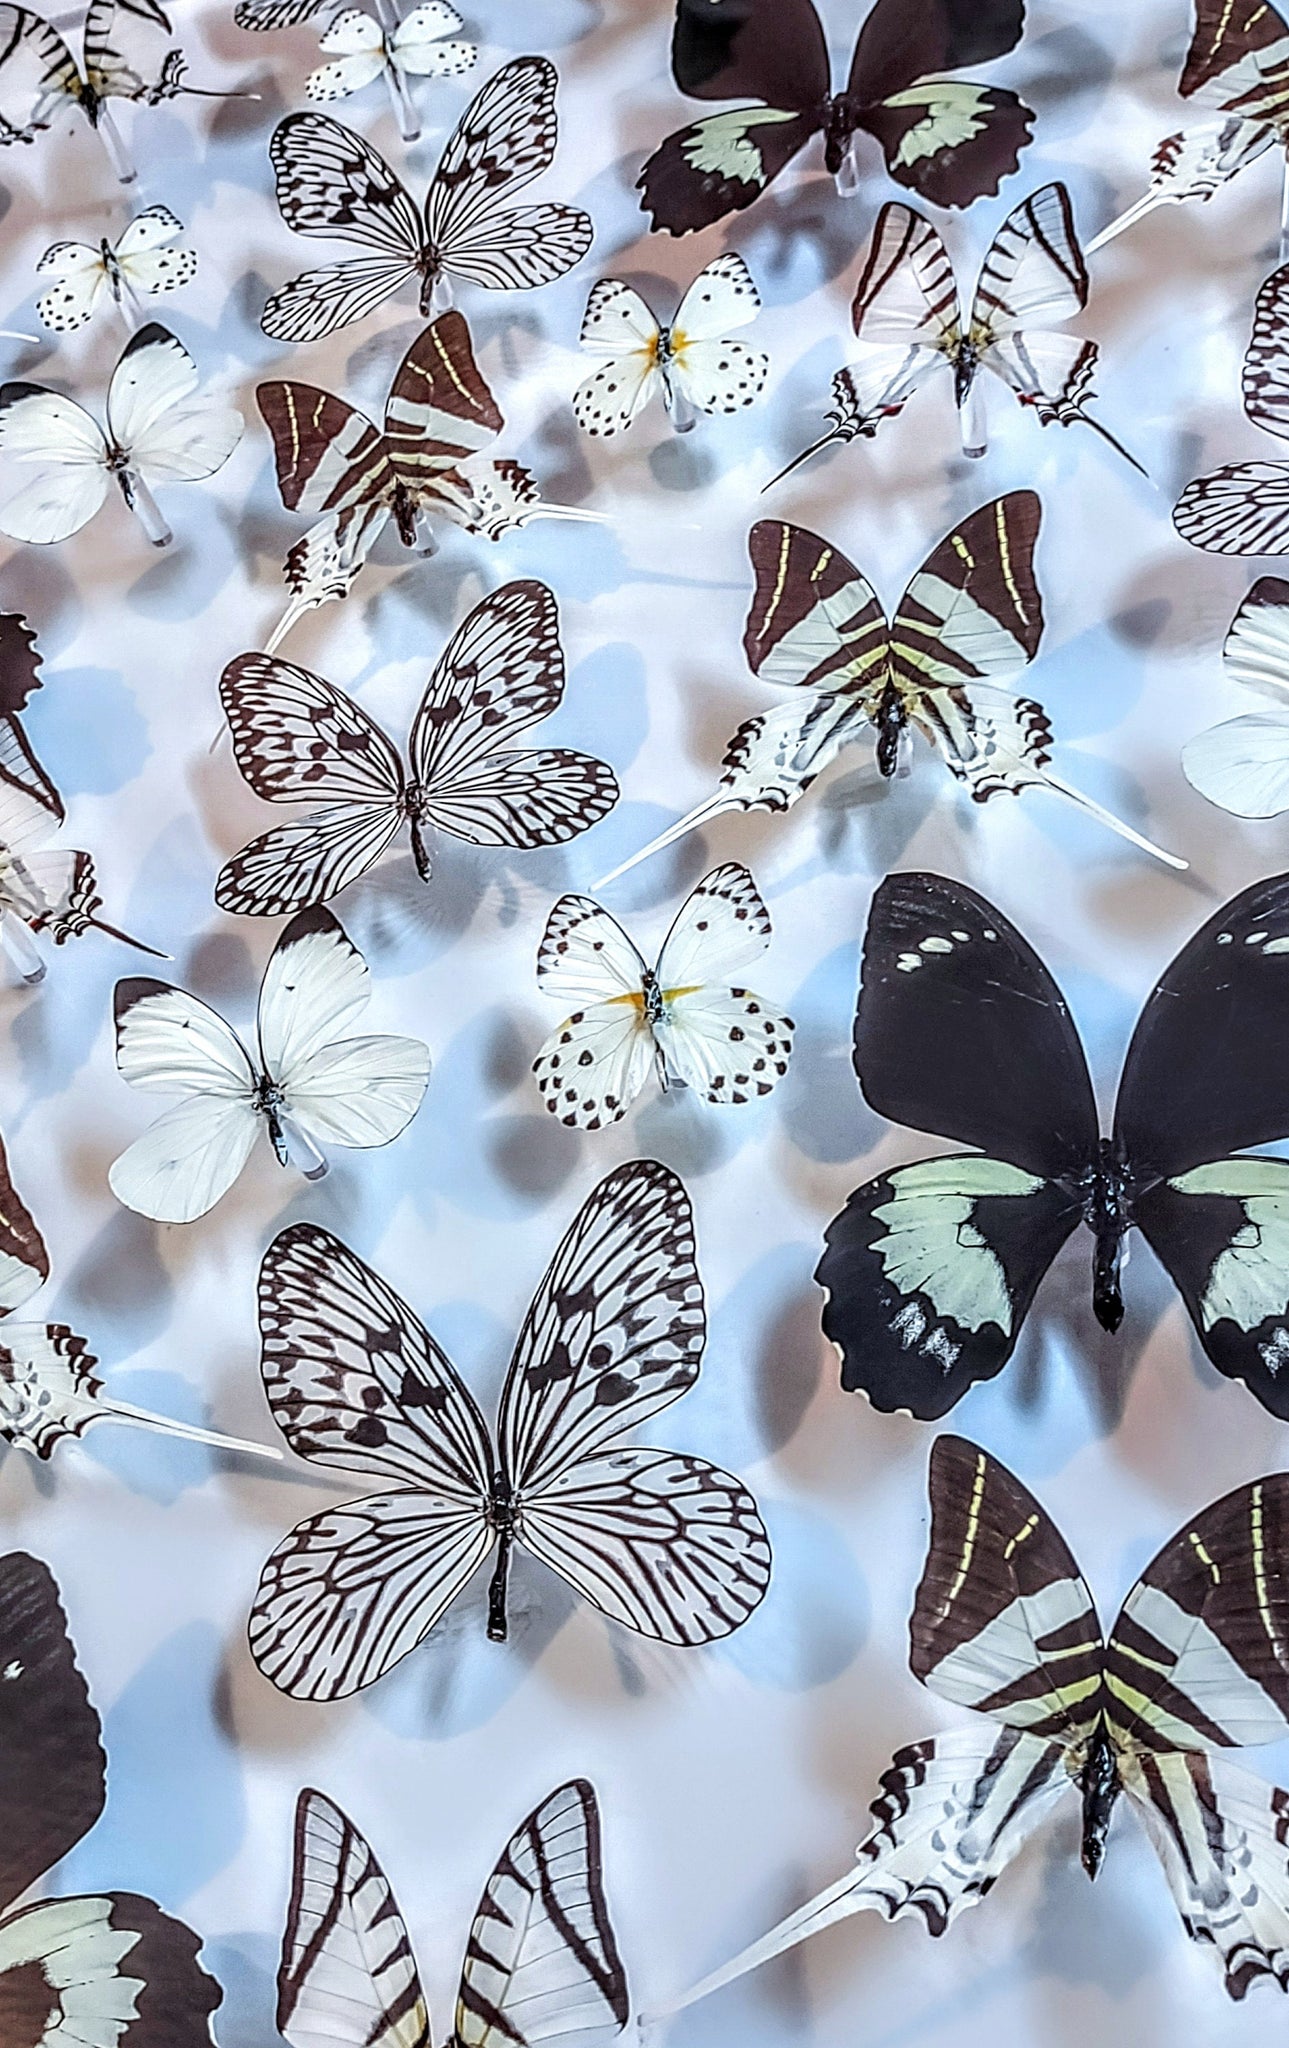 20x30x2.5 butterfly display, framed butterflies, mounted